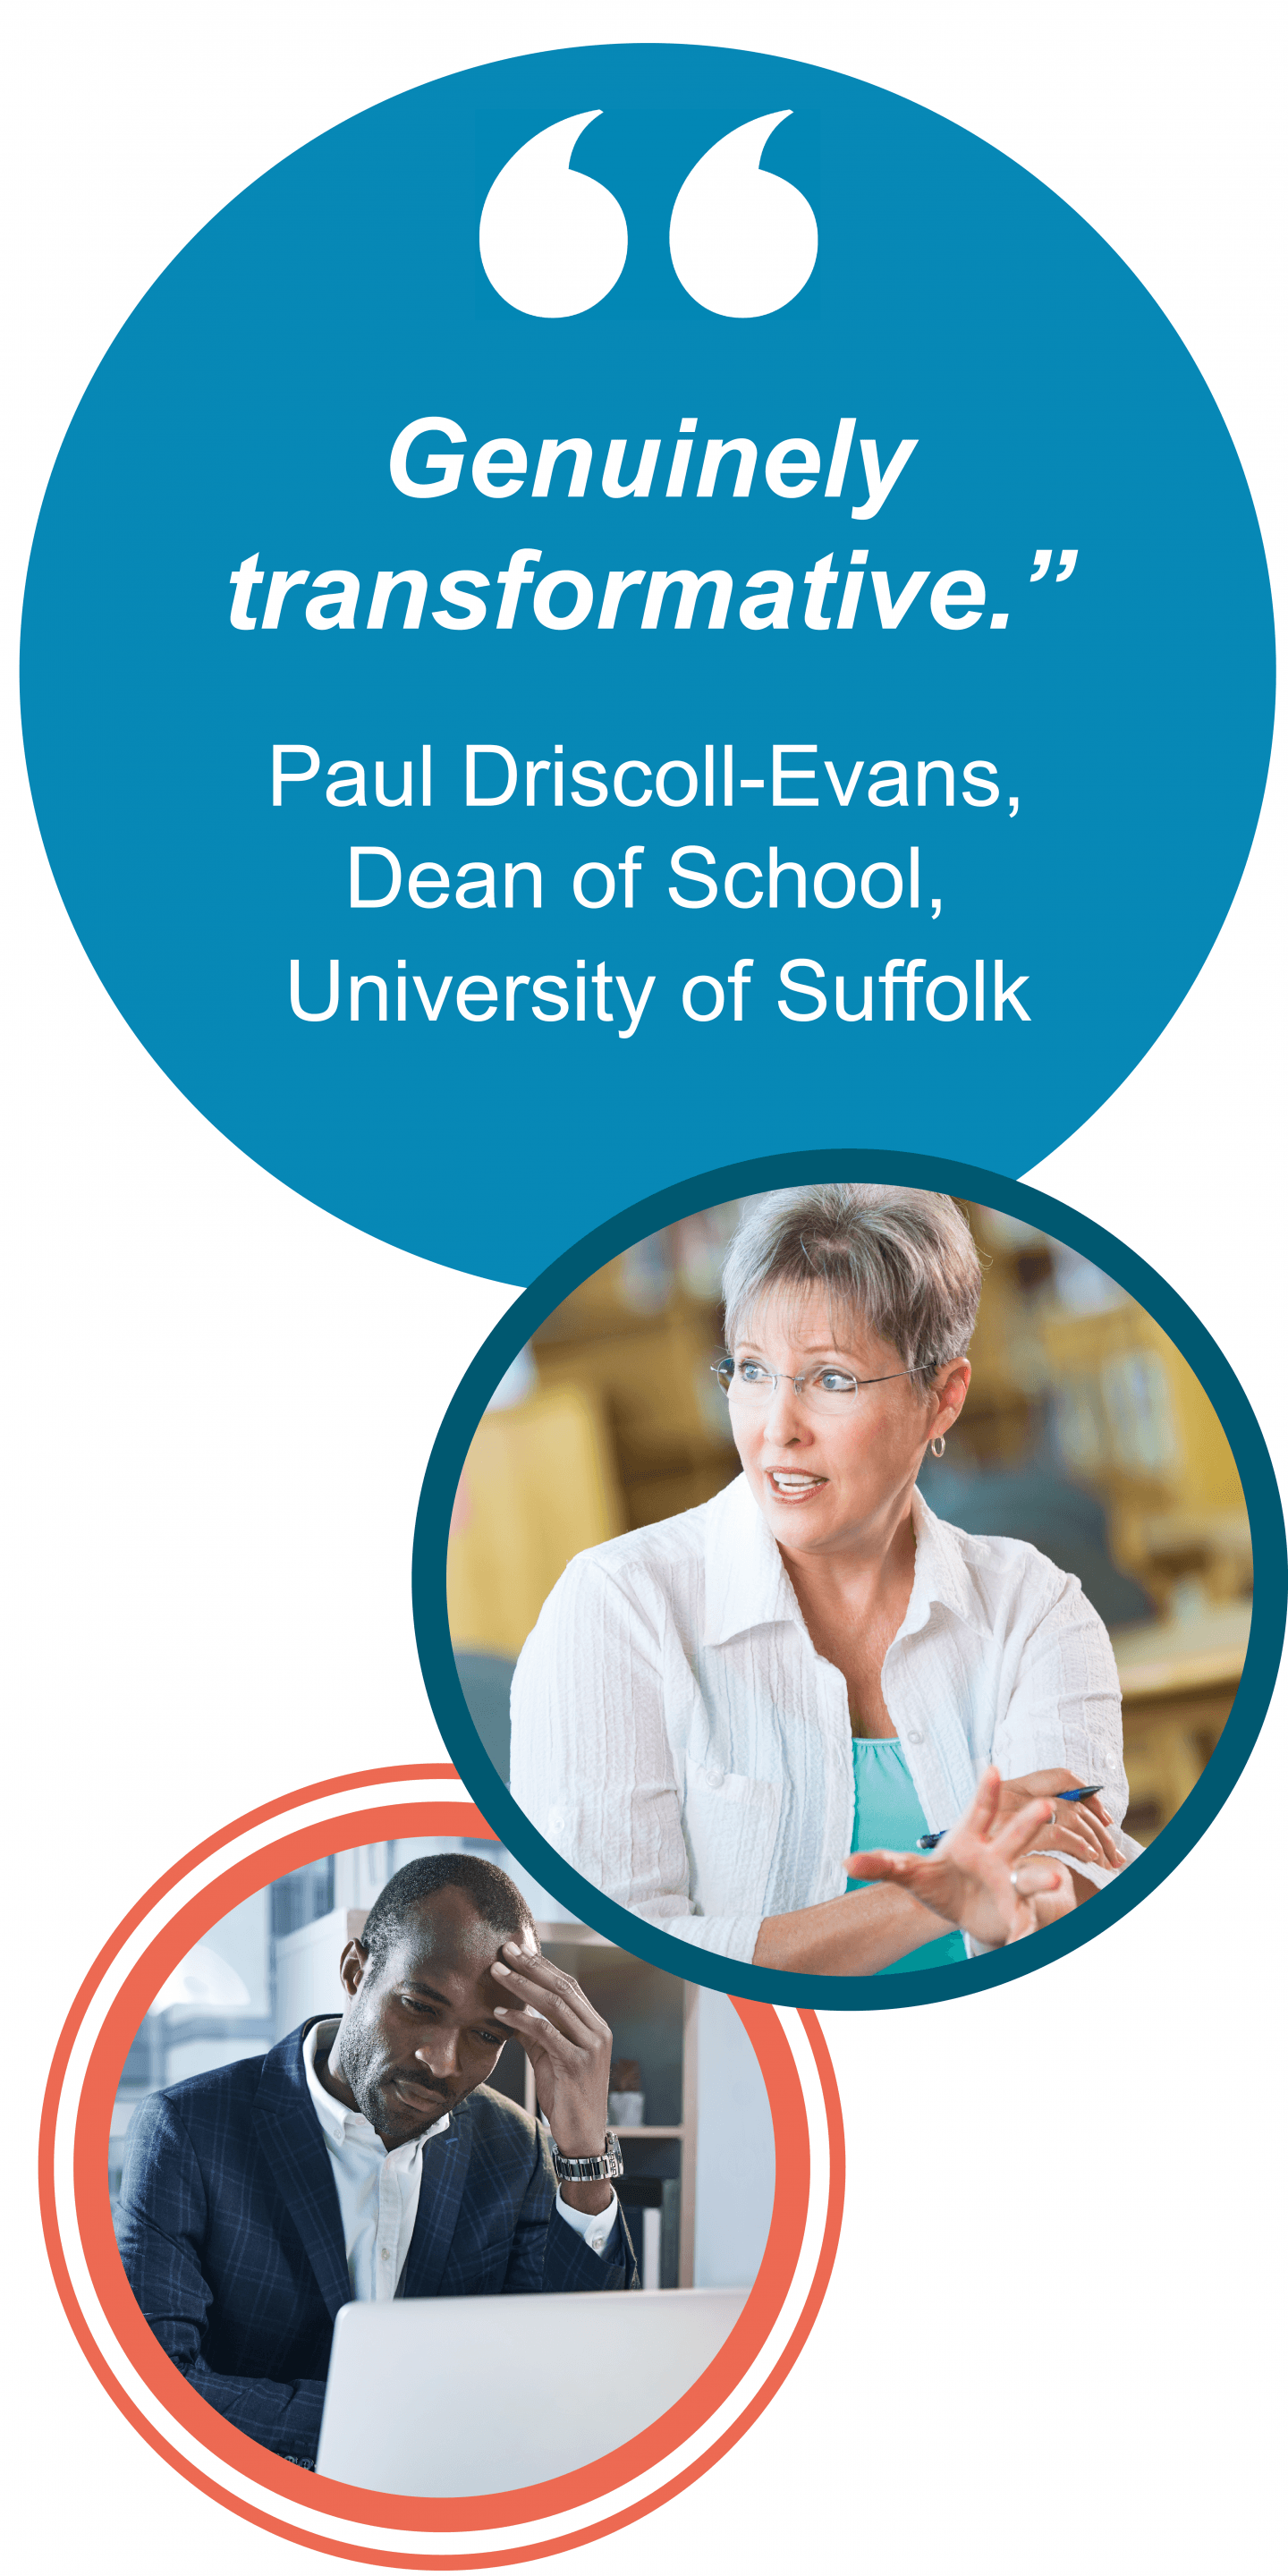 "Genuinely transformative.” Paul Driscoll-Evans, Dean of School, University of Suffolk